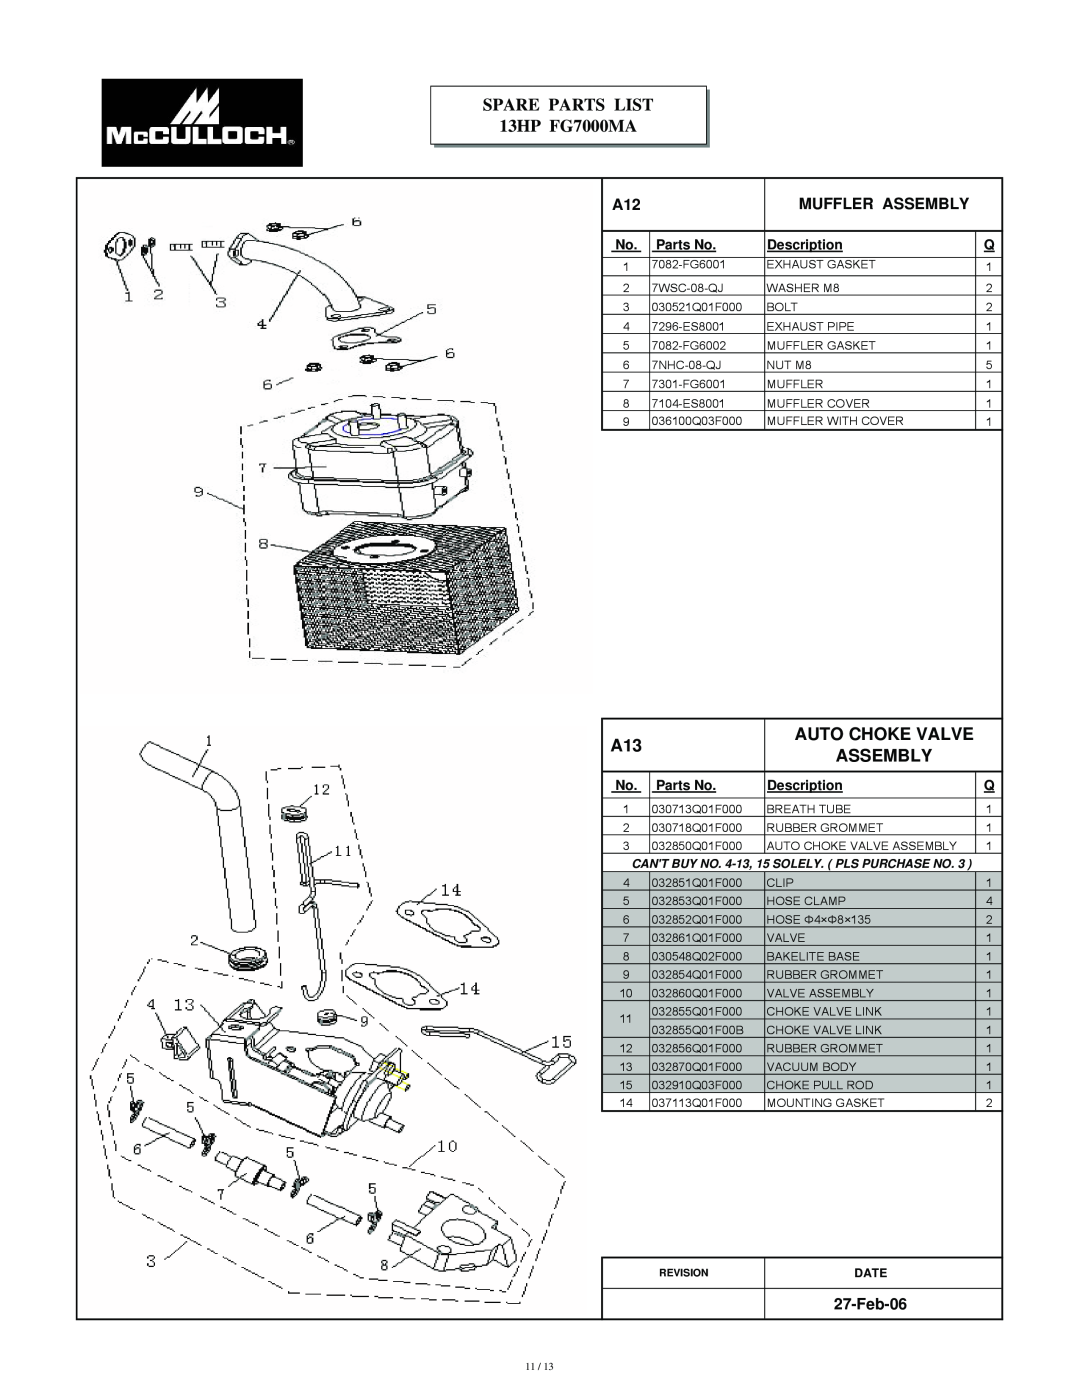 McCulloch Auto Choke Valve, Muffler Assembly, SPARE PARTS LIST 13HP FG7000MA, Feb-06, Parts No, Description, Date 